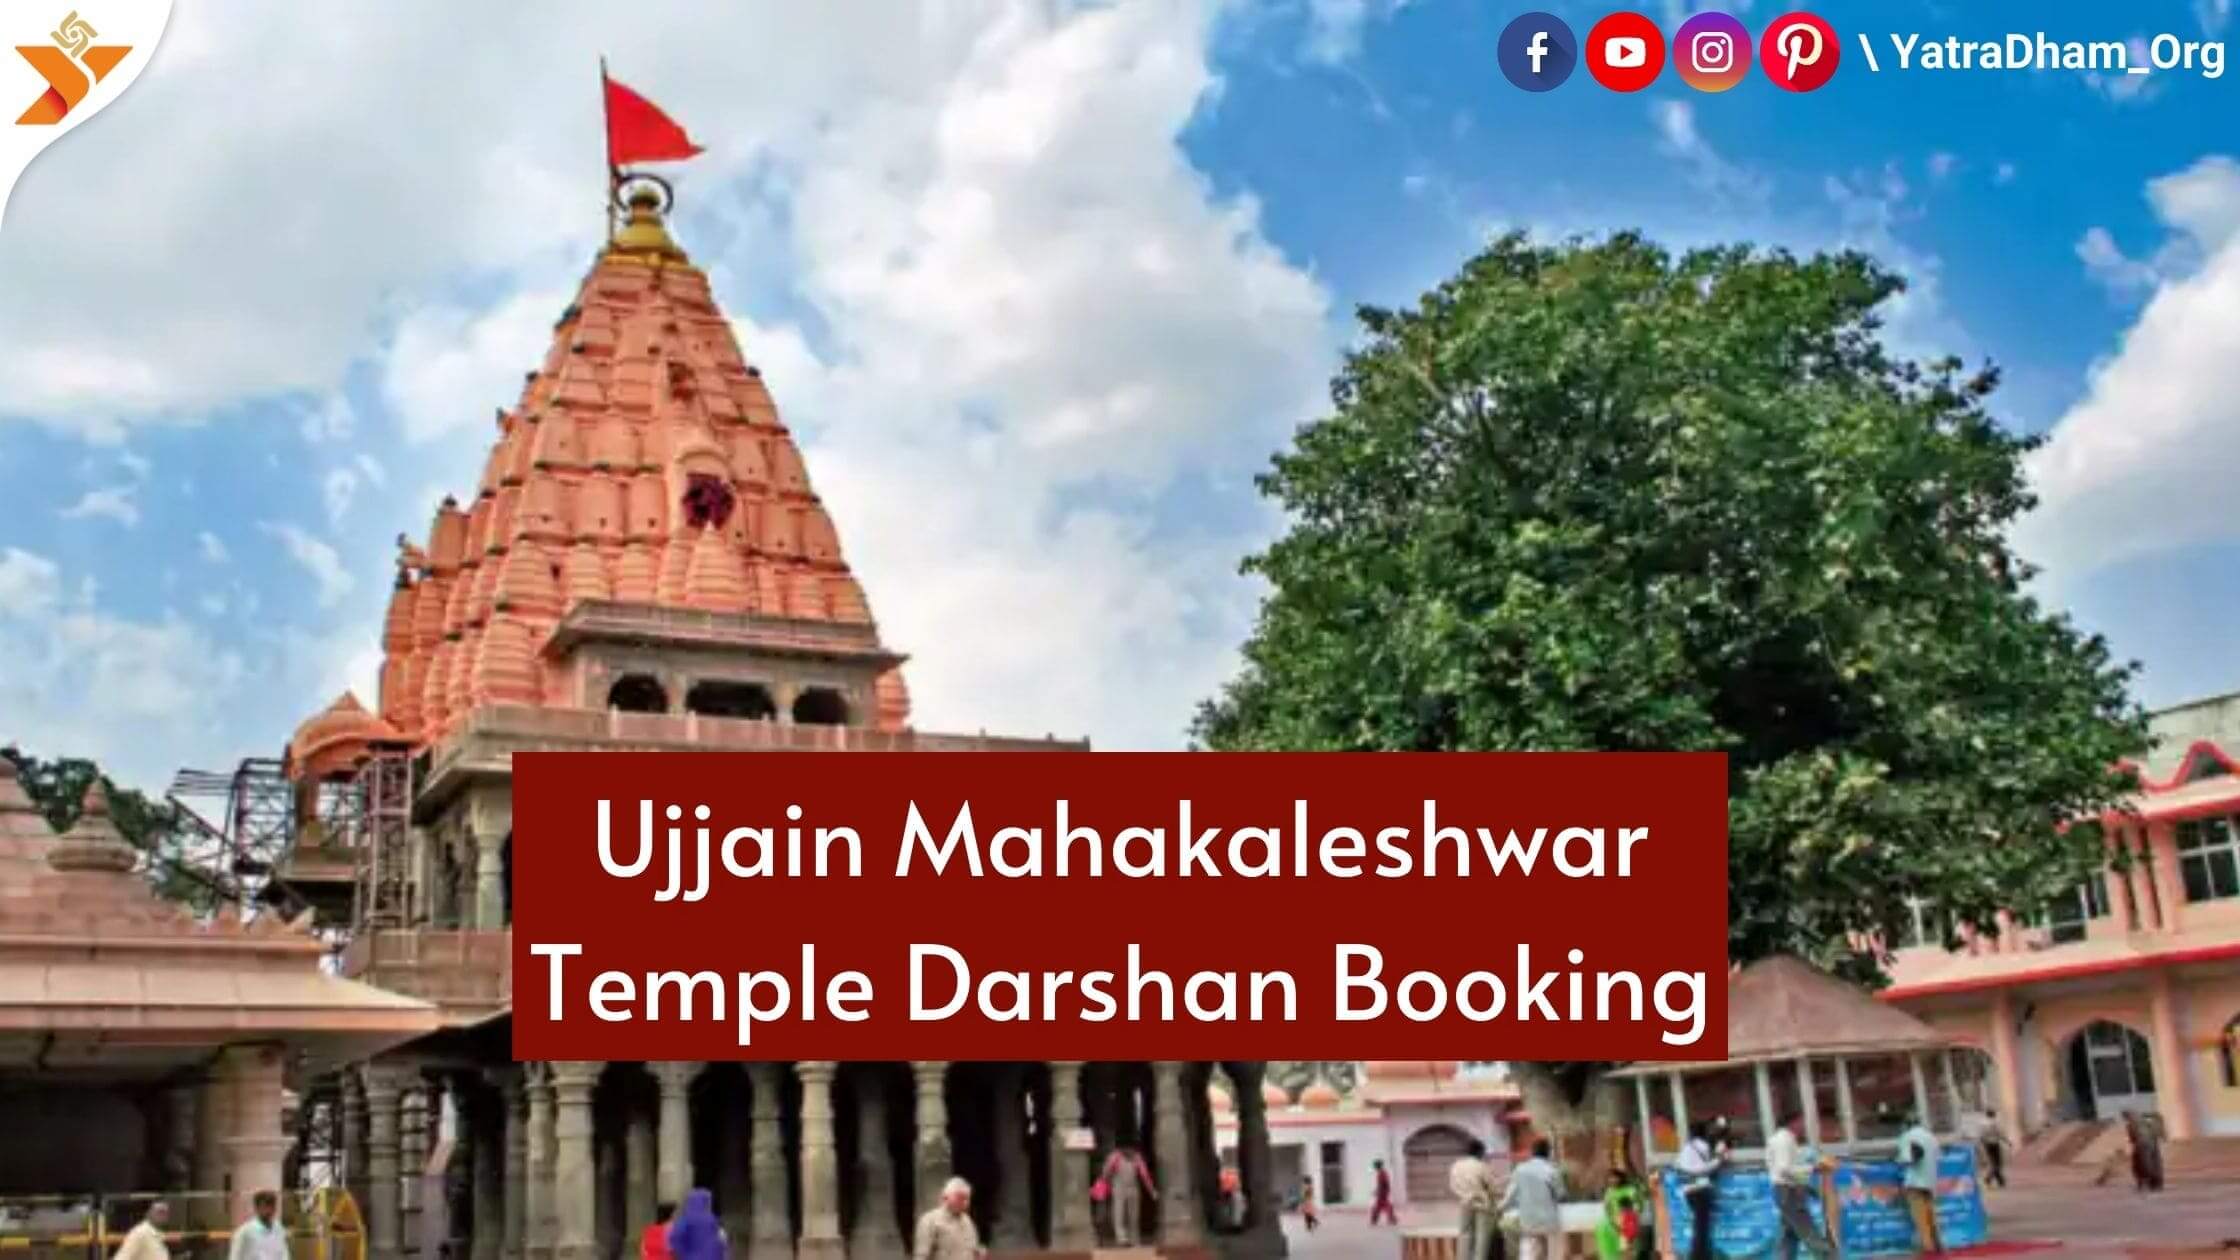 Mahakaleshwar Temple Darshan Booking